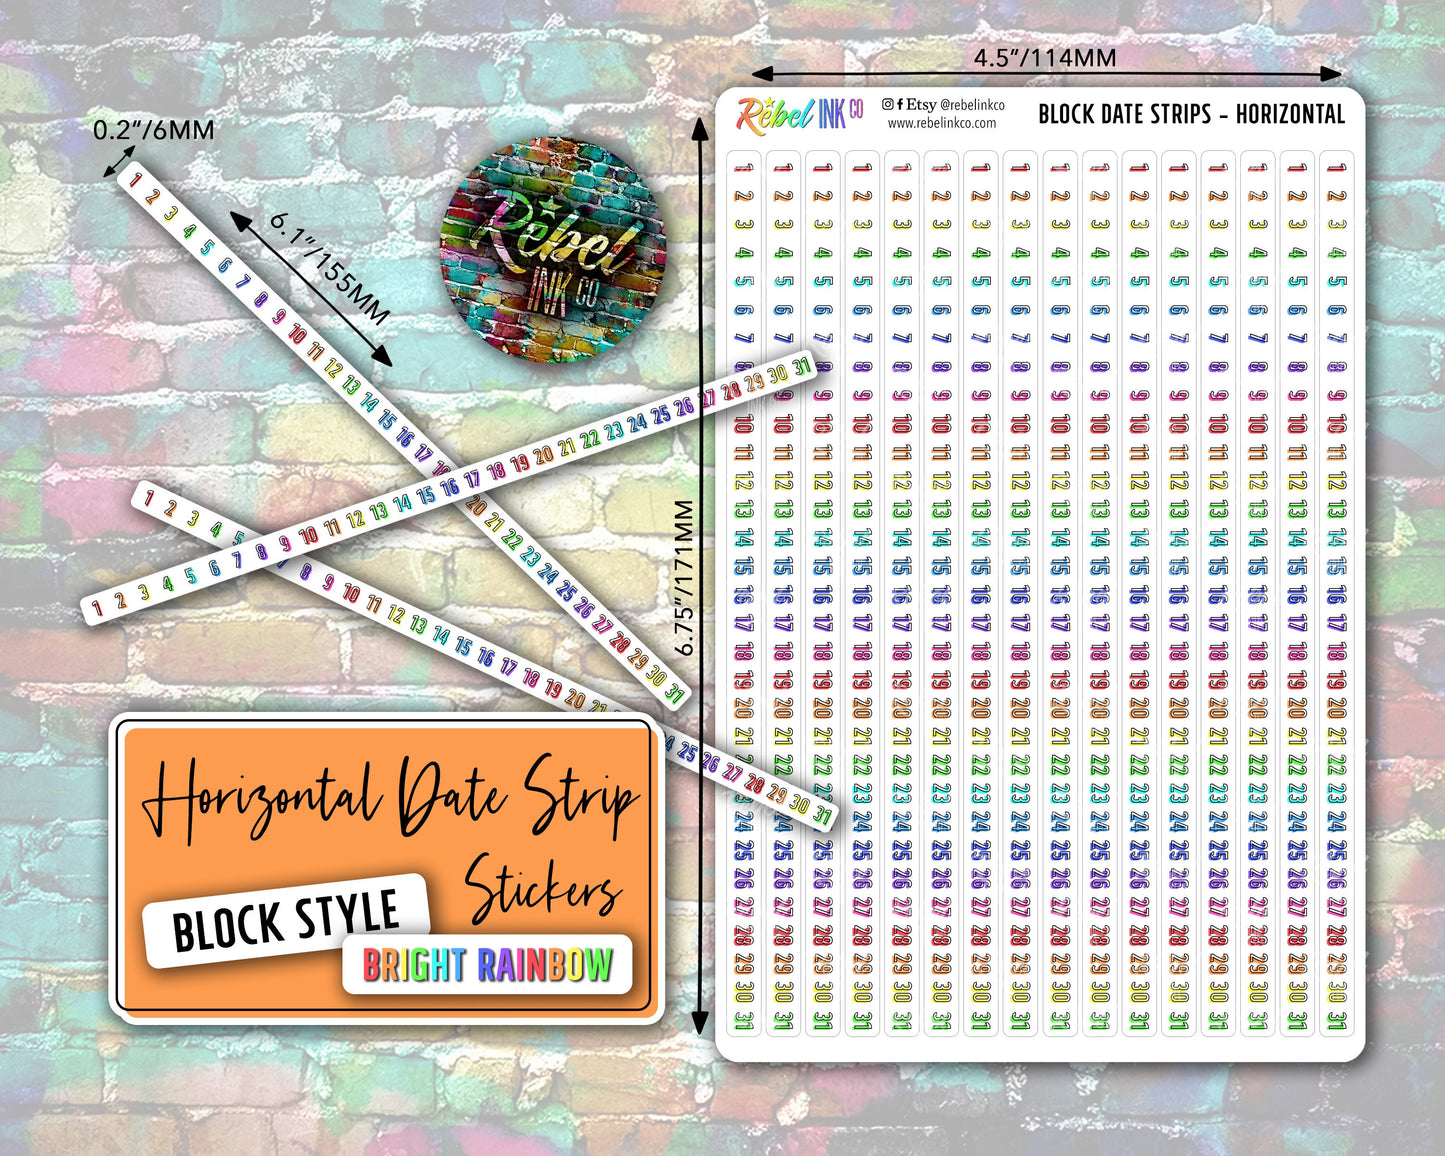 Horizontal Date Strip Stickers - Bright Rainbow - Block Style